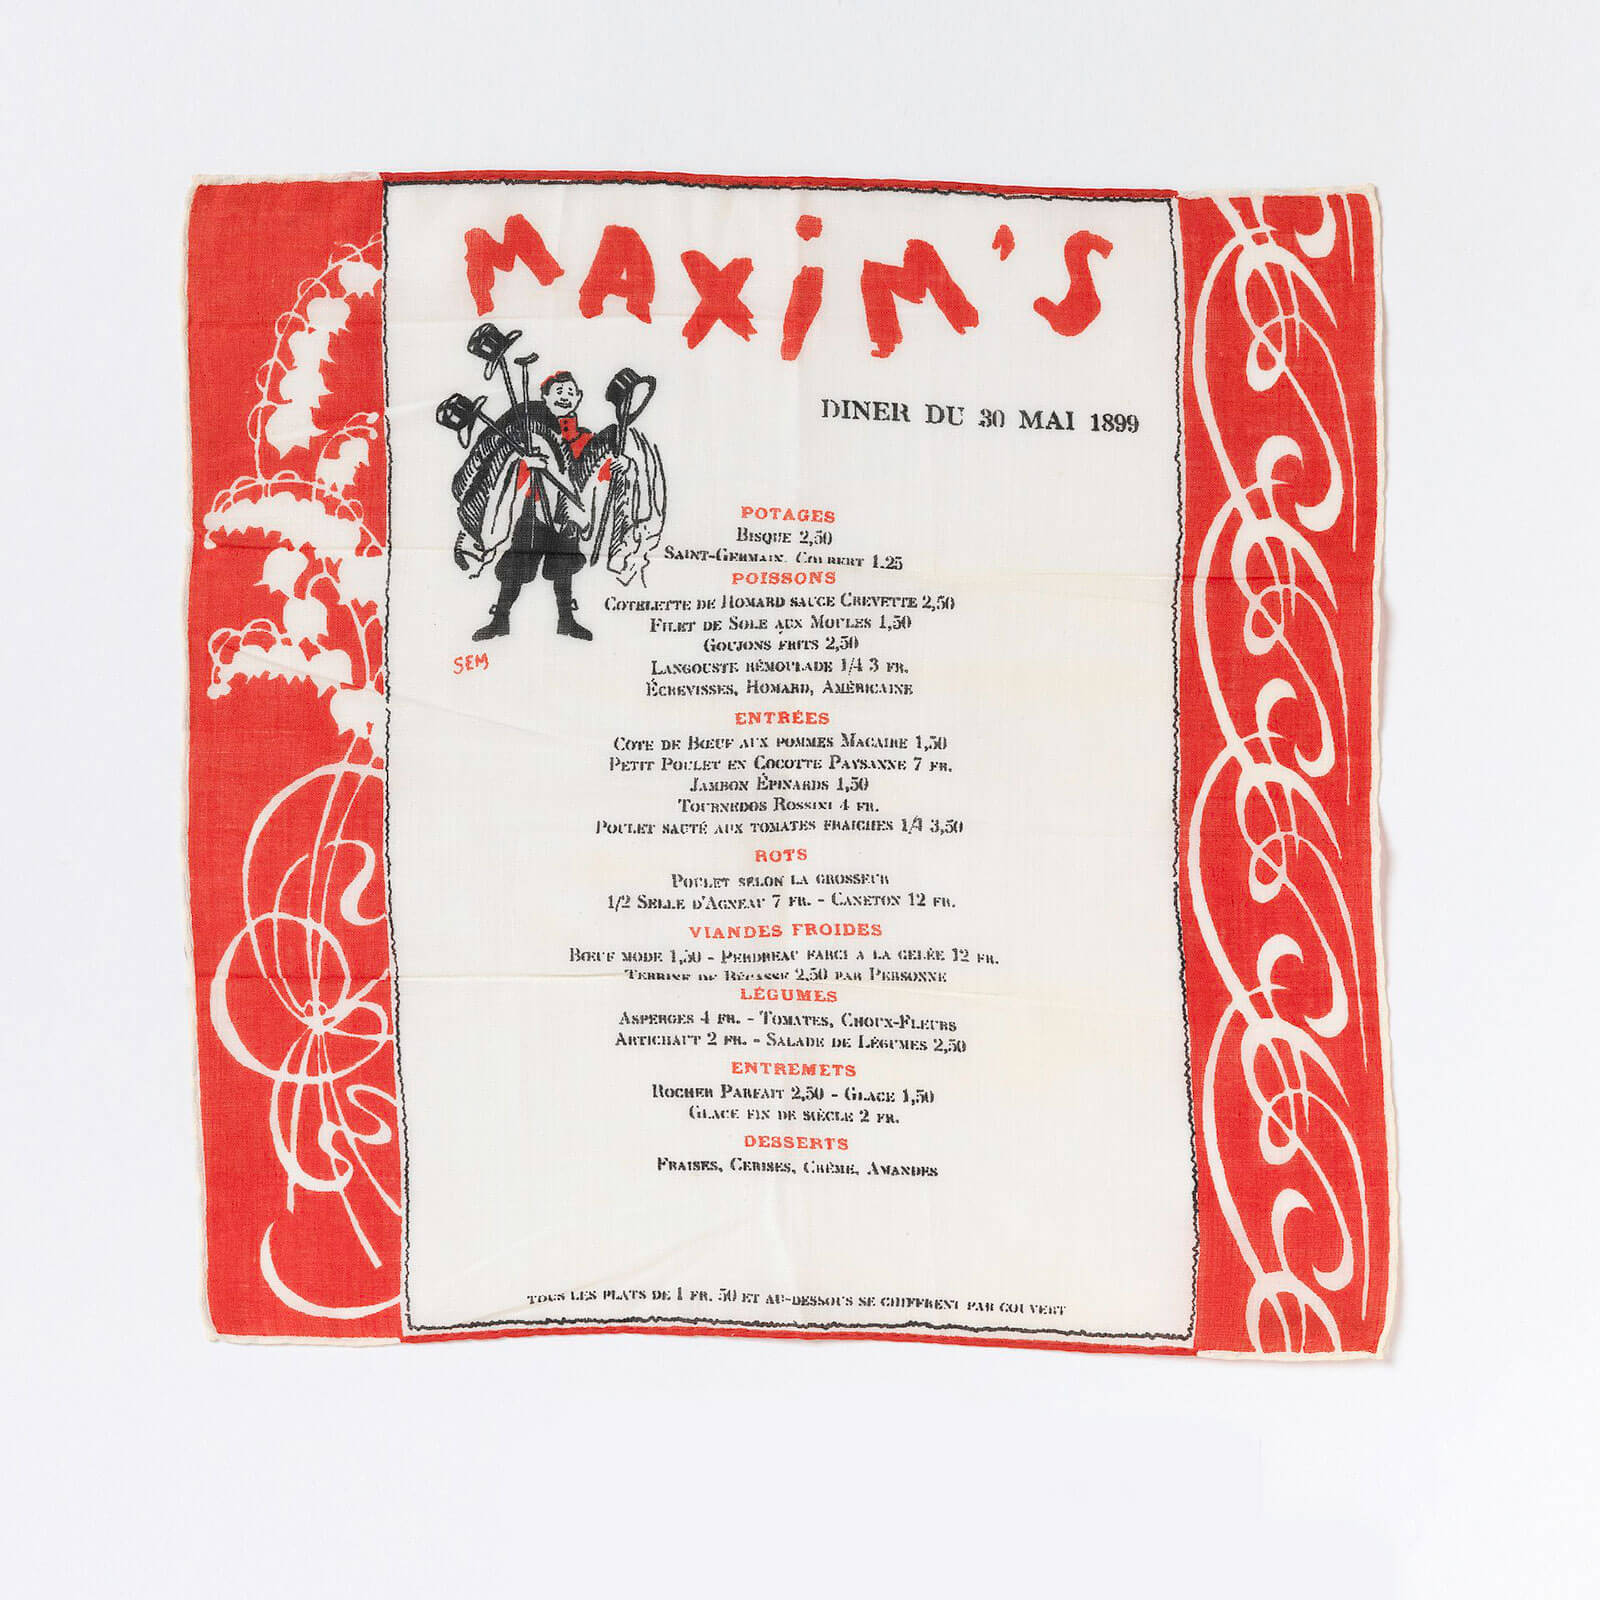 Maxim's menu on a handkerchief from 1899